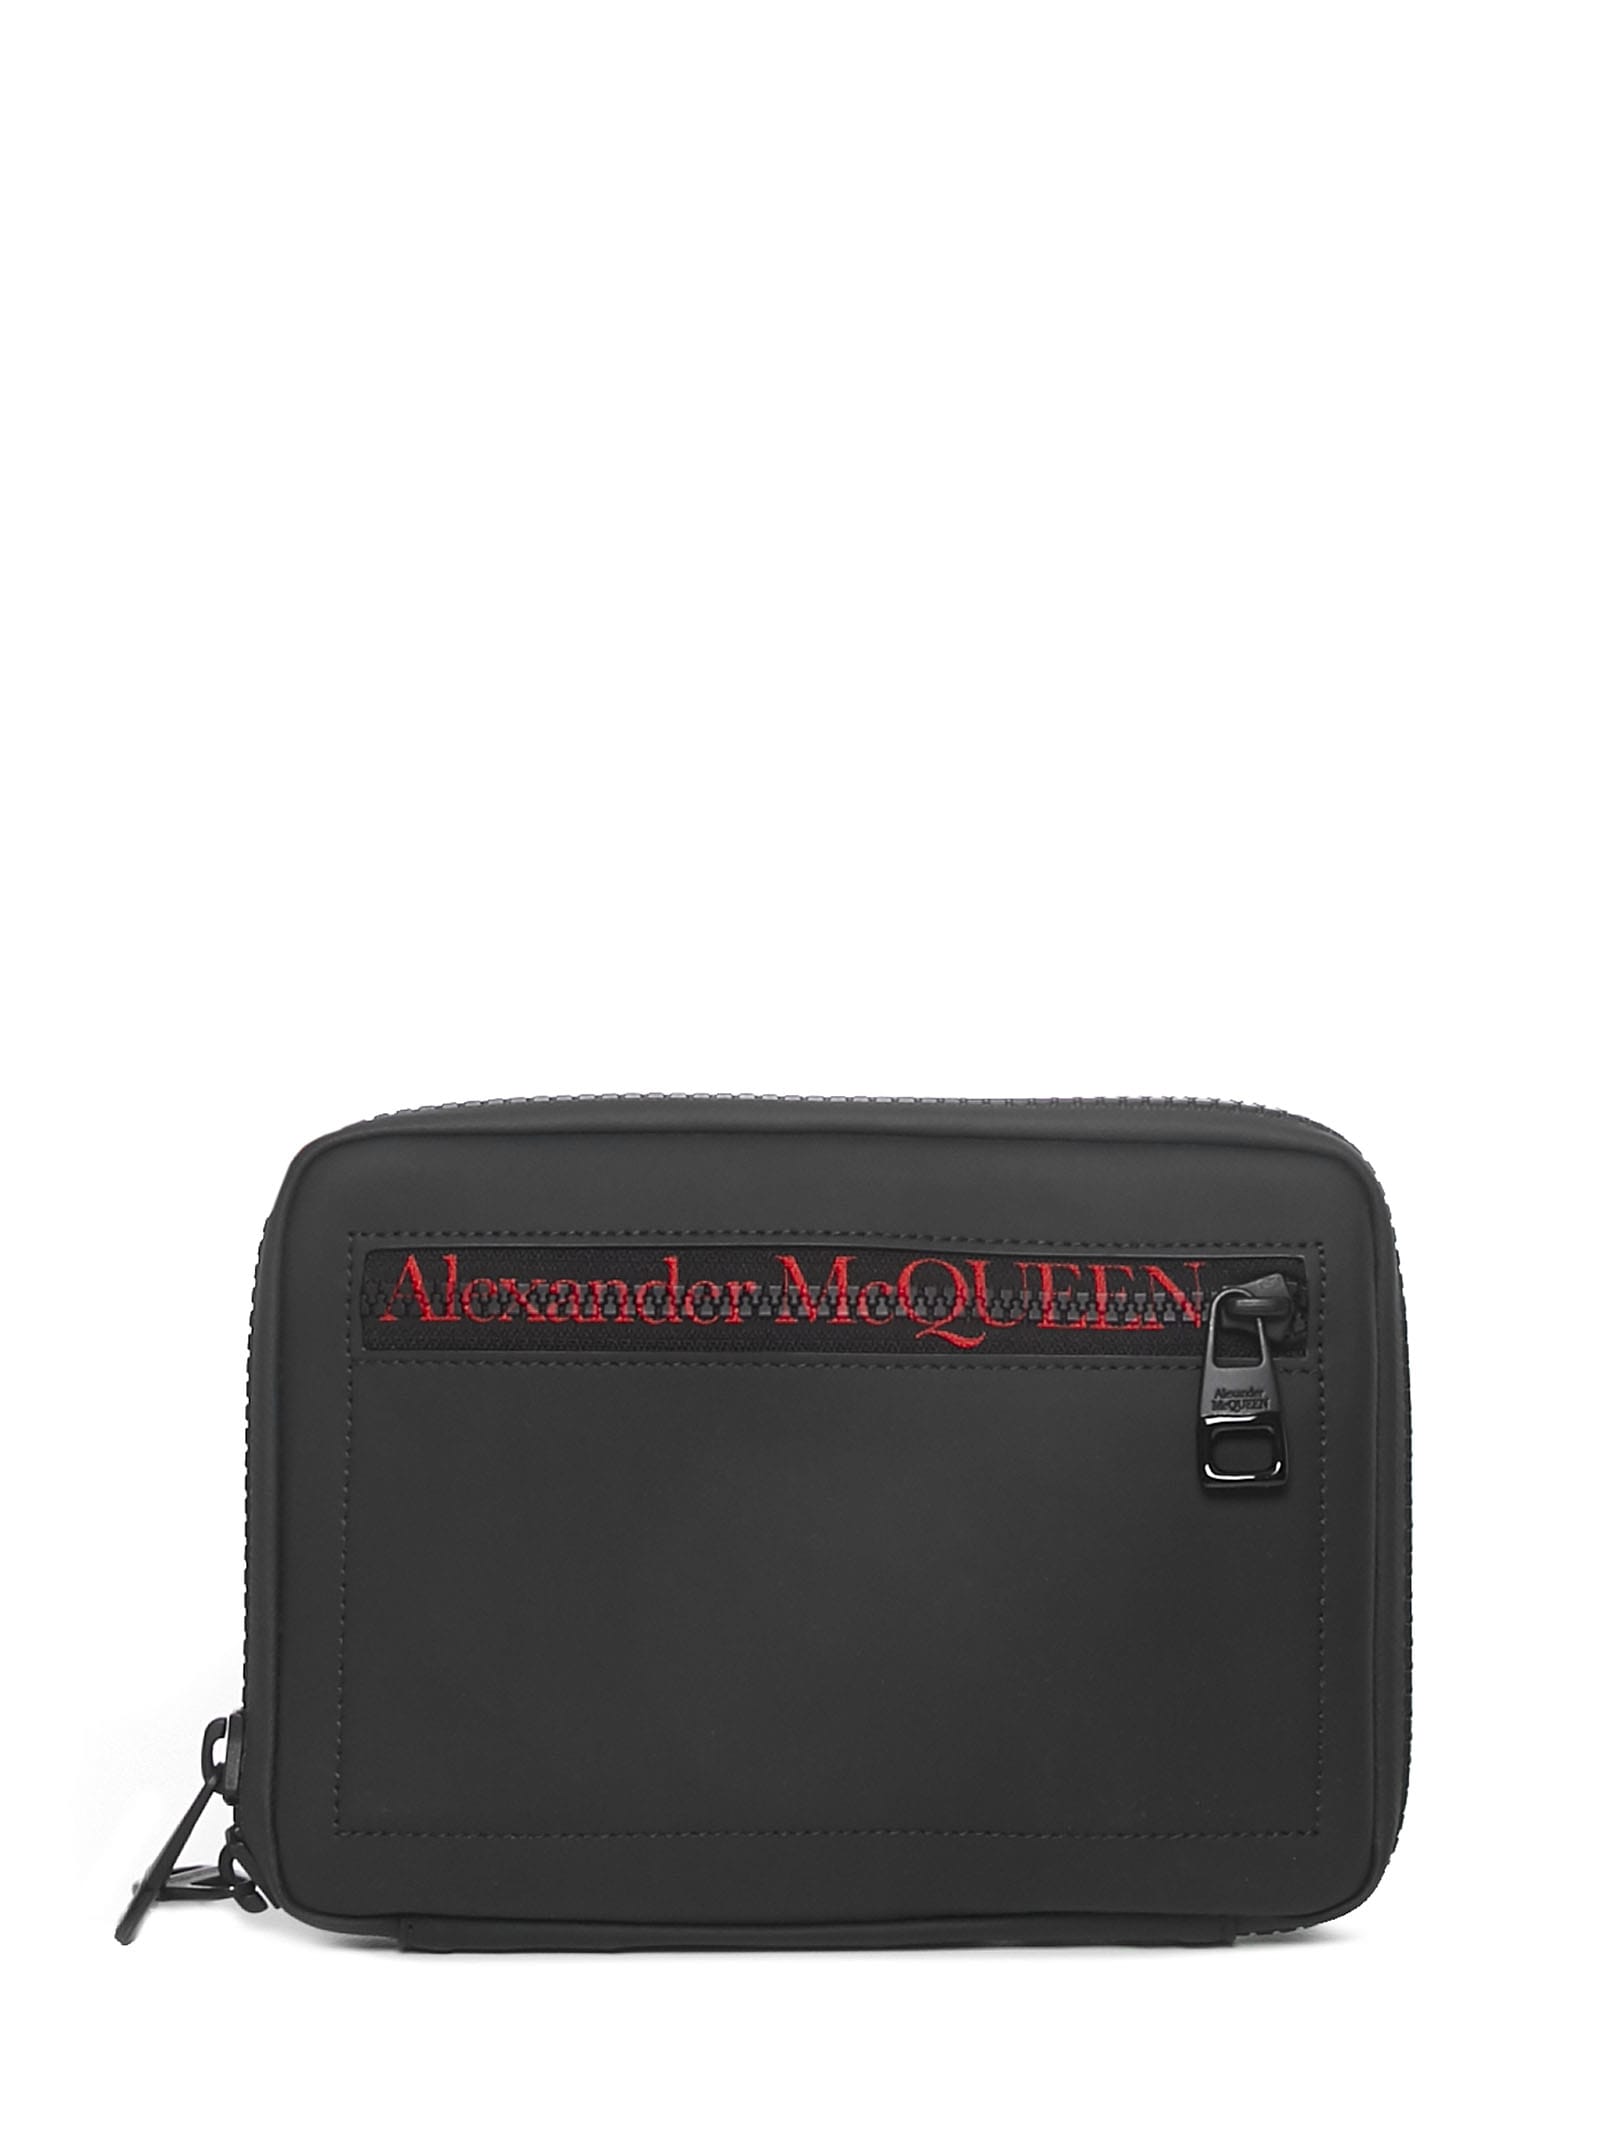 Alexander Mcqueen I-pad Case In Black